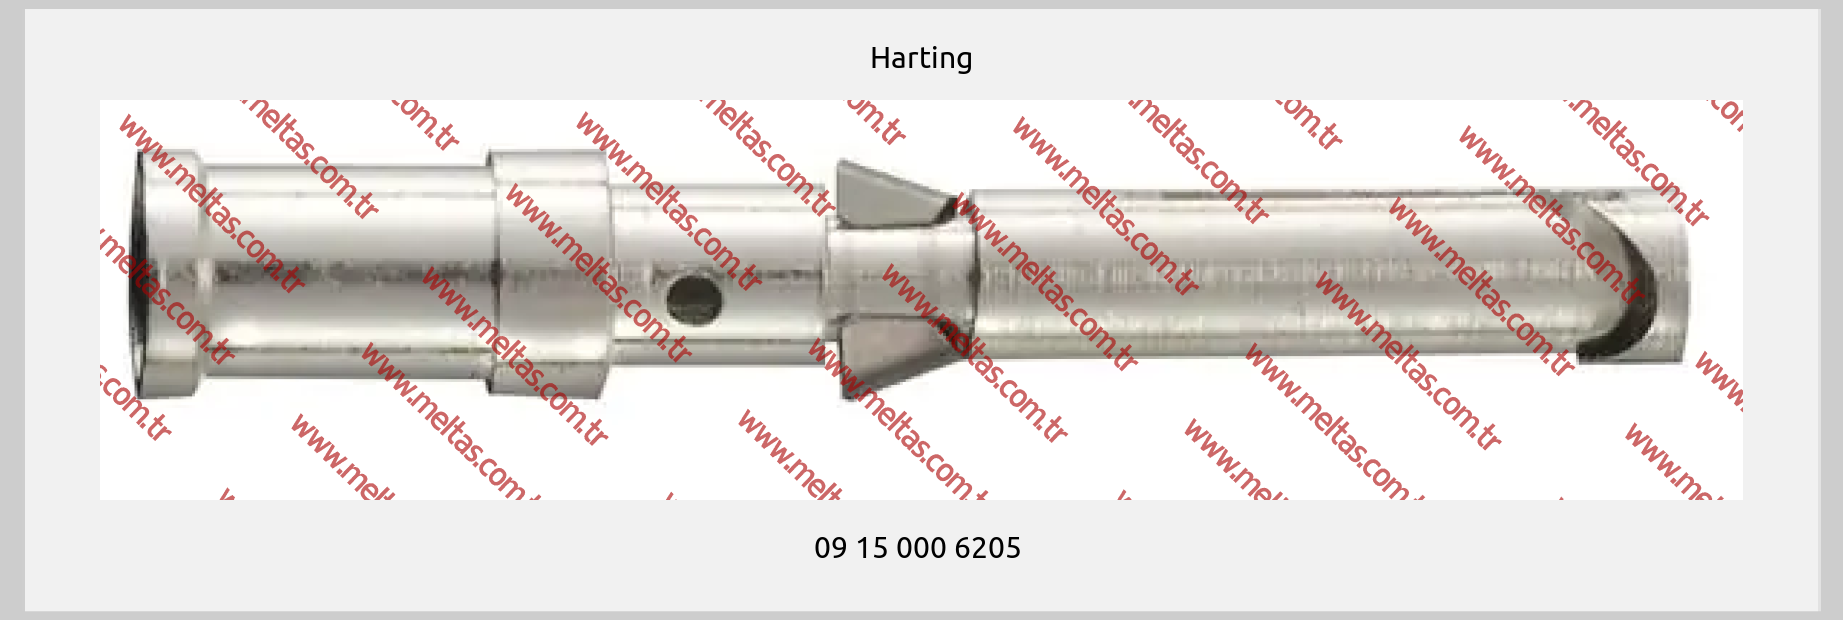 Harting-09 15 000 6205 